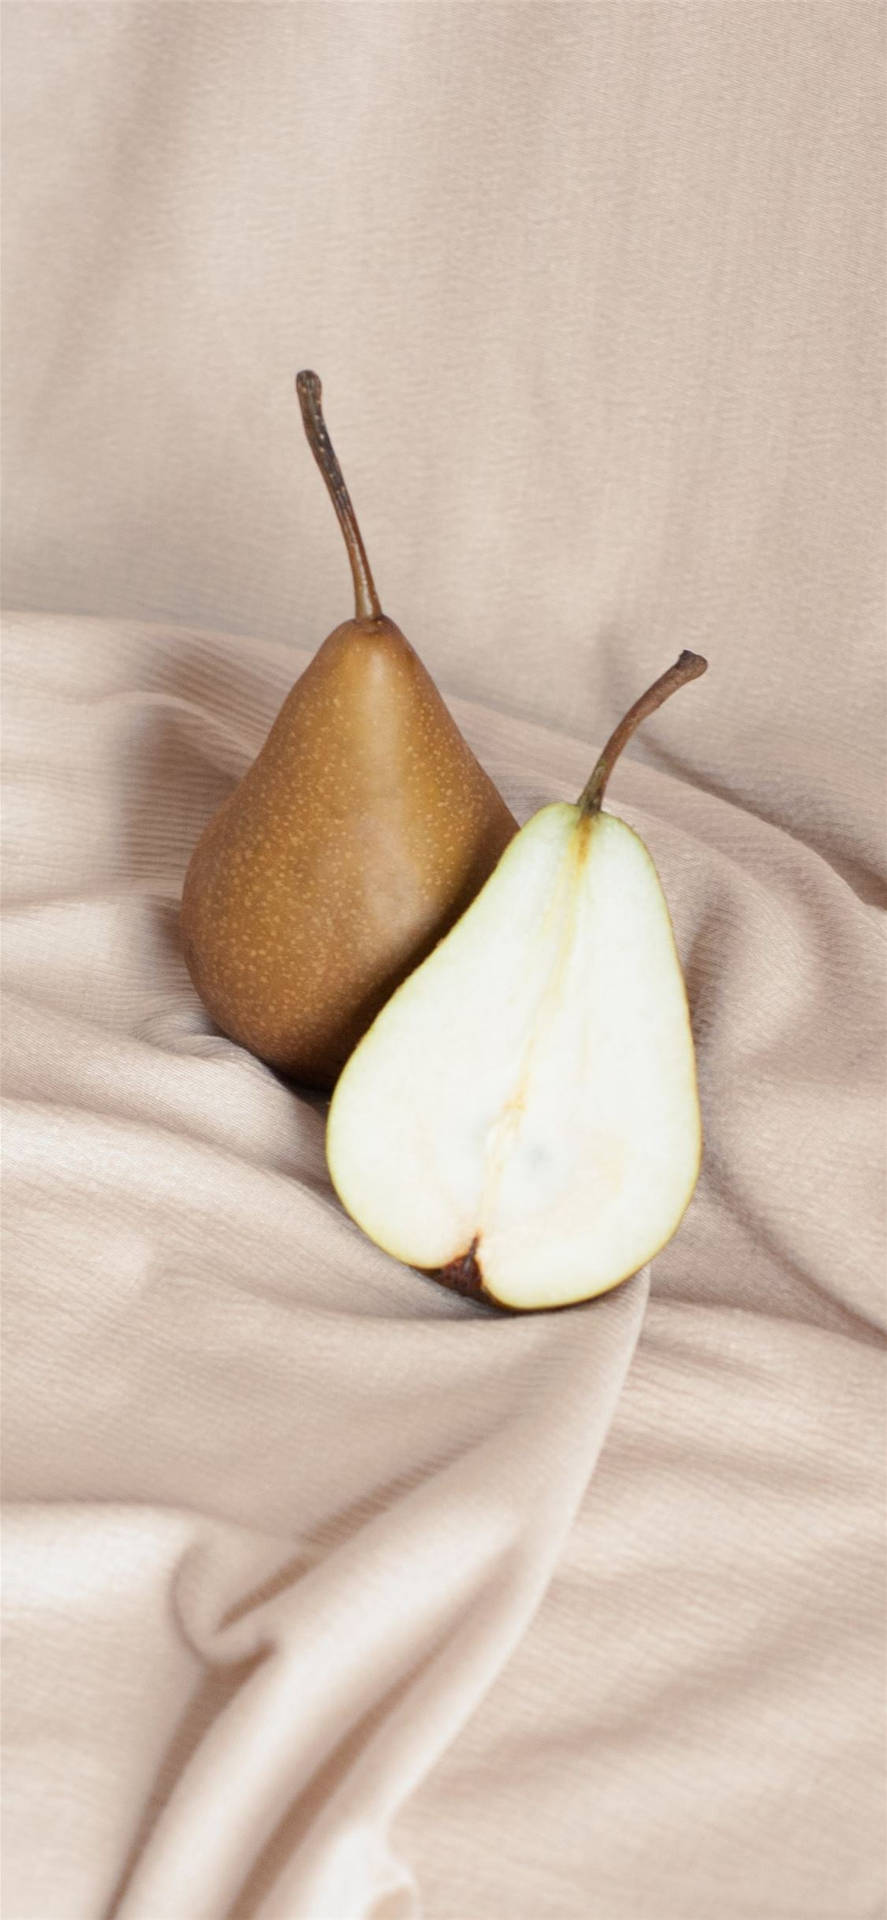 Slice Of Pear Wallpaper